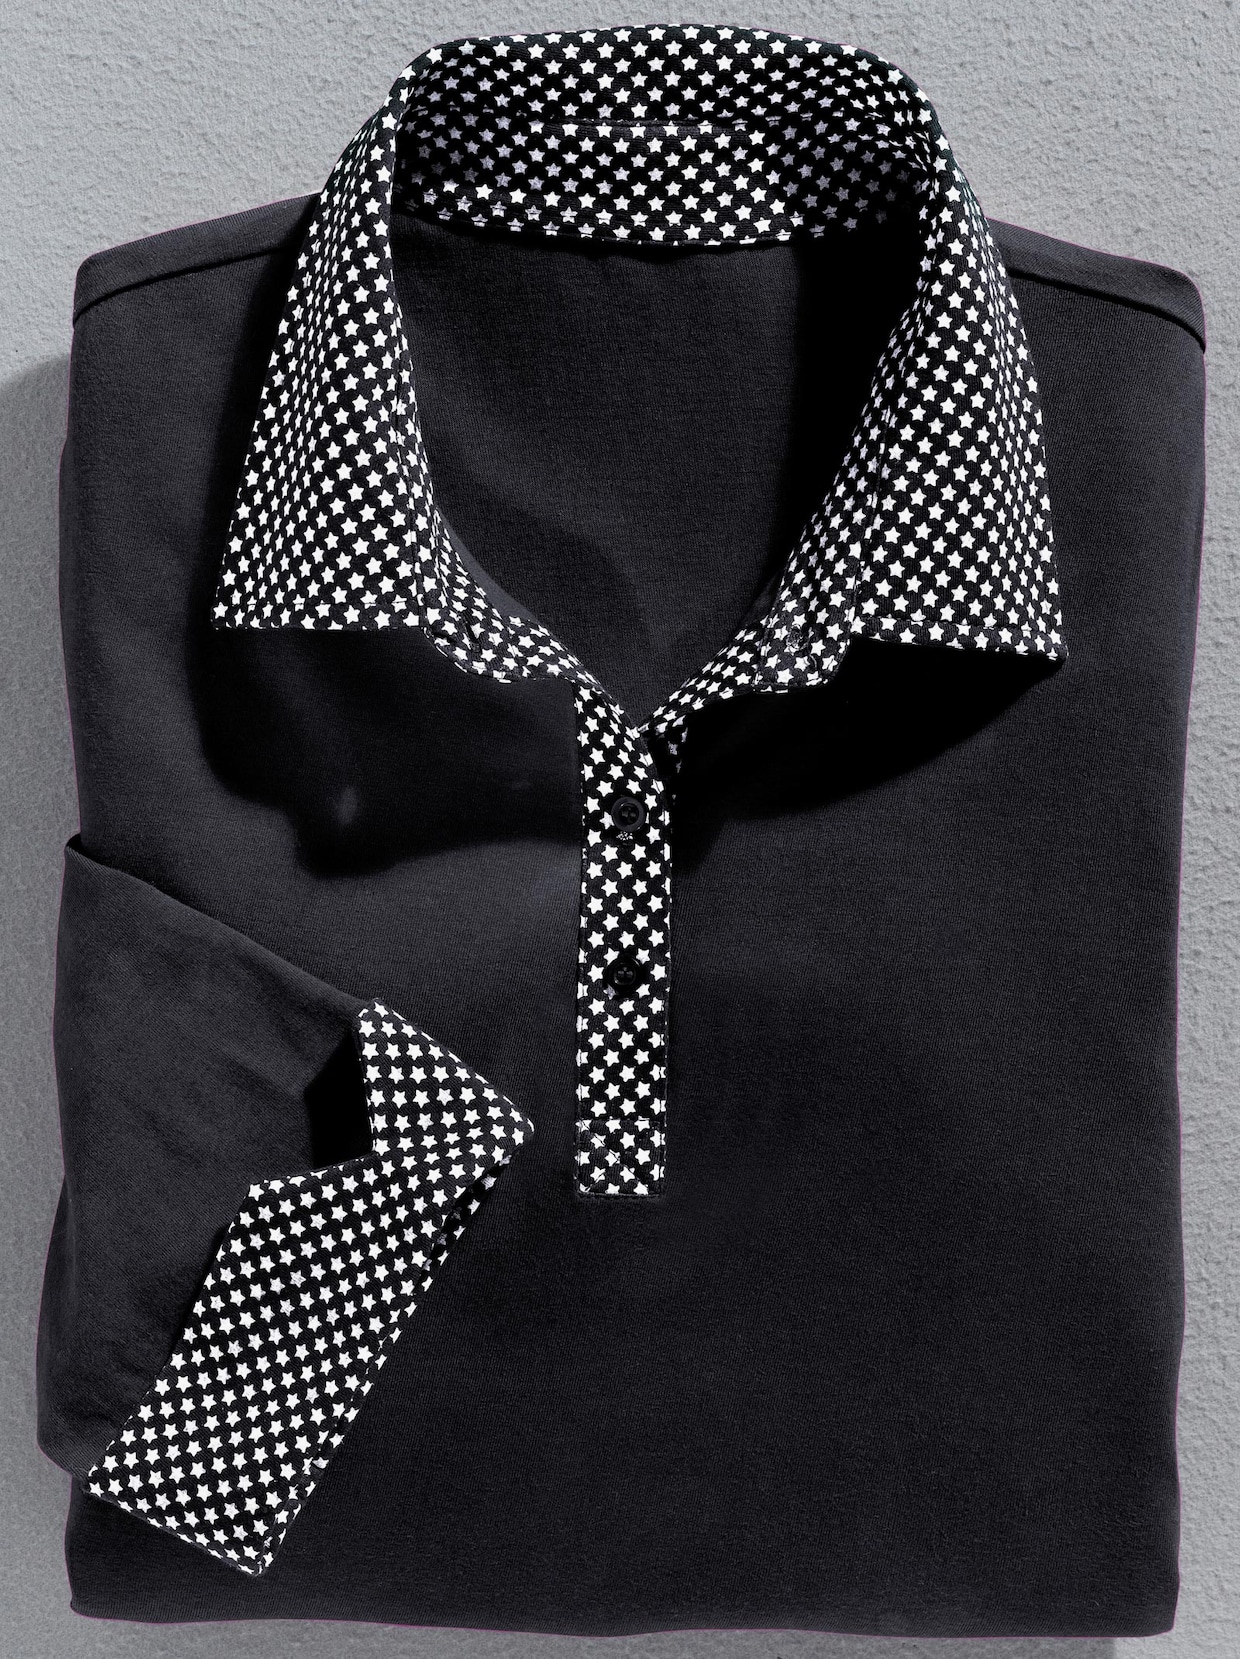 Poloshirt - schwarz